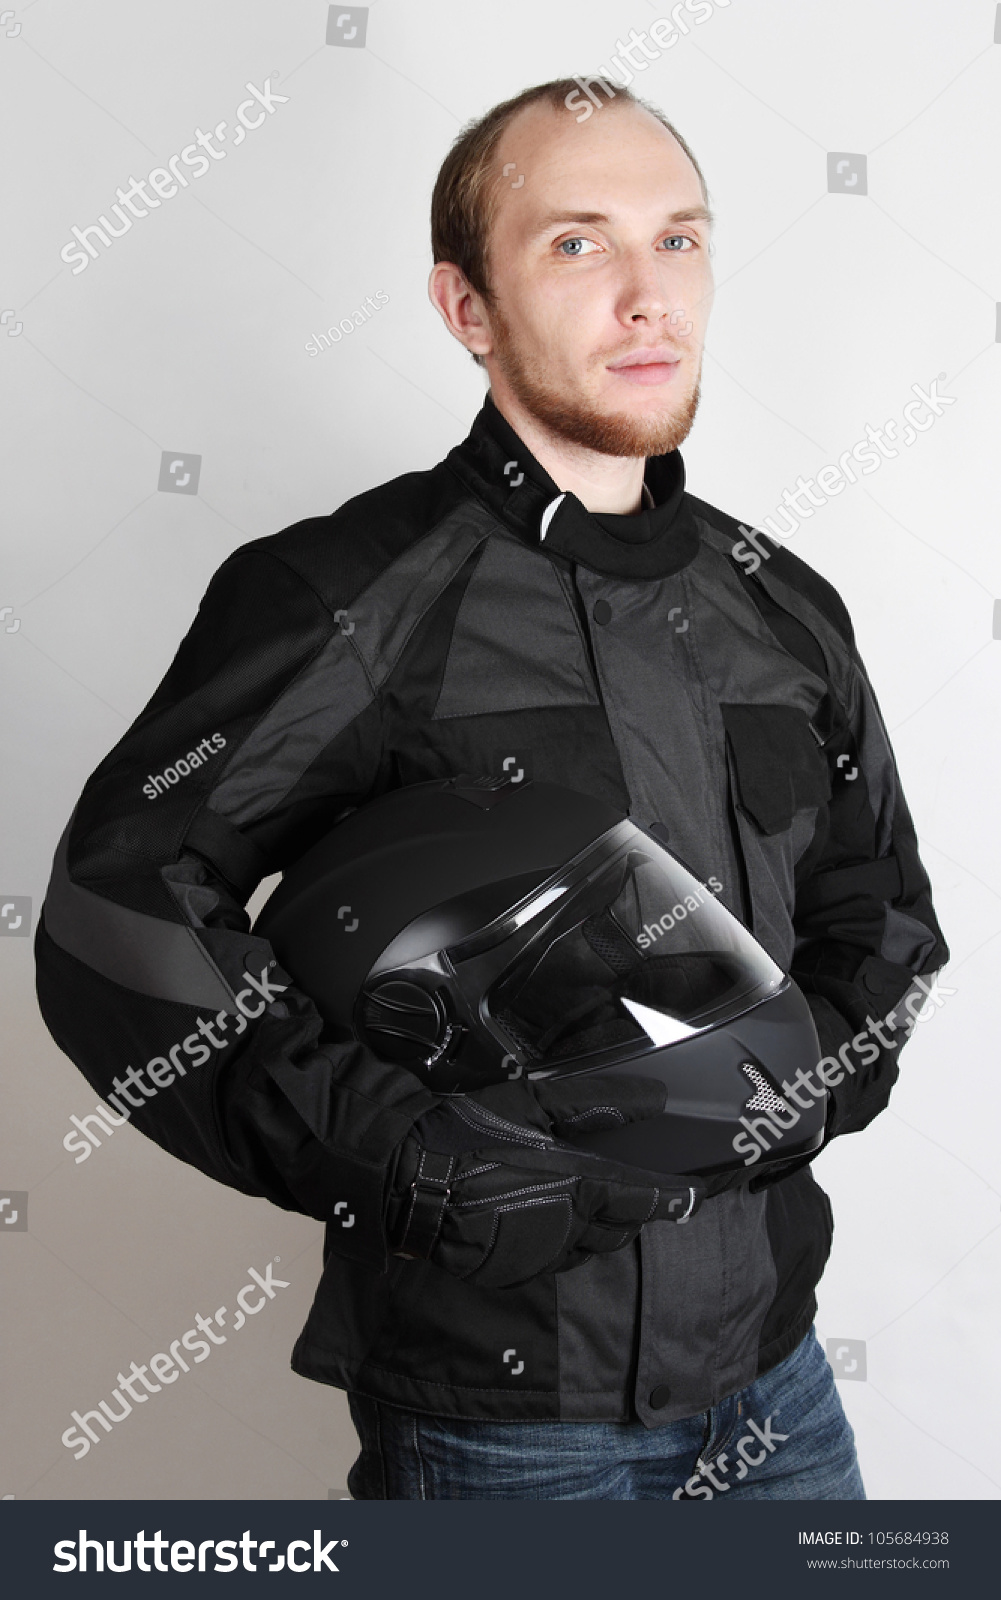 Young Motorcyclist Man Holding Helmet In Studio Stock Photo 105684938 ...